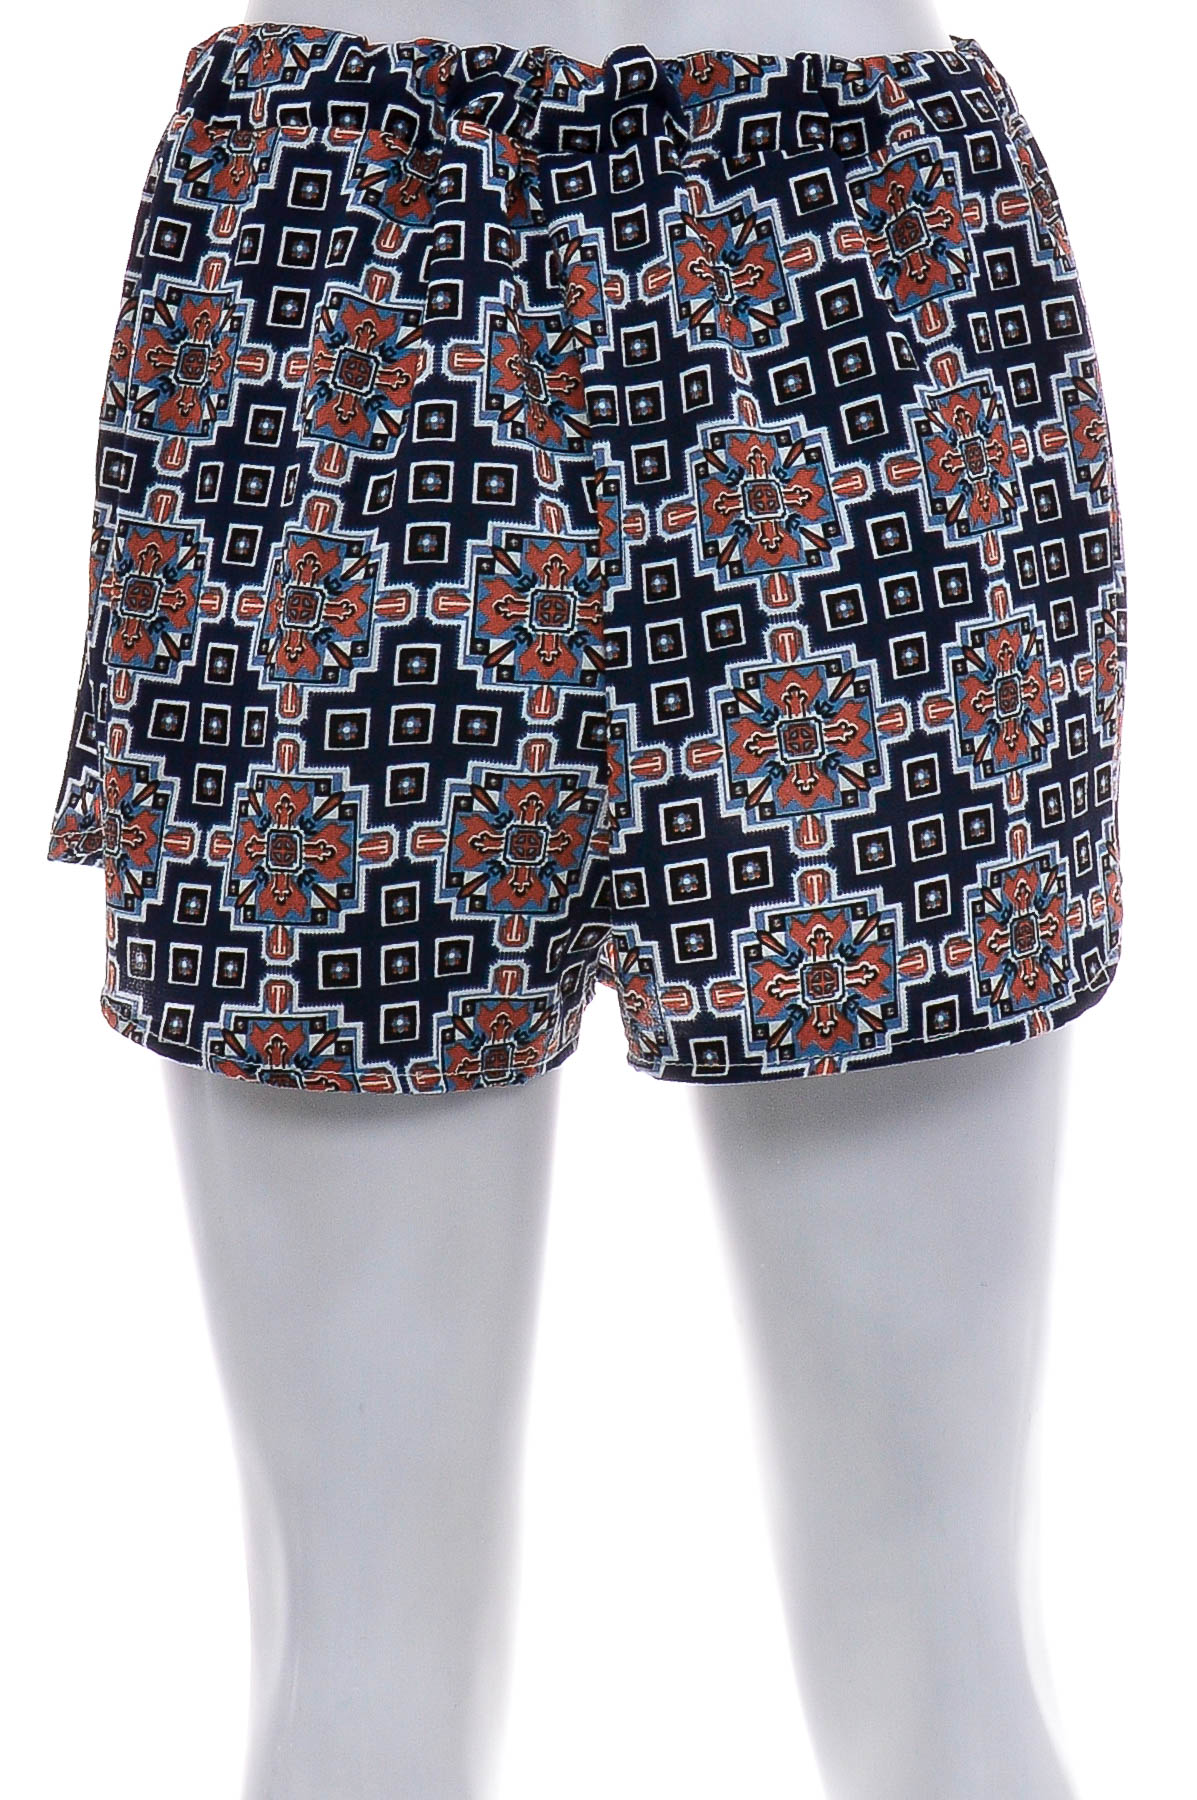 Female shorts - 1